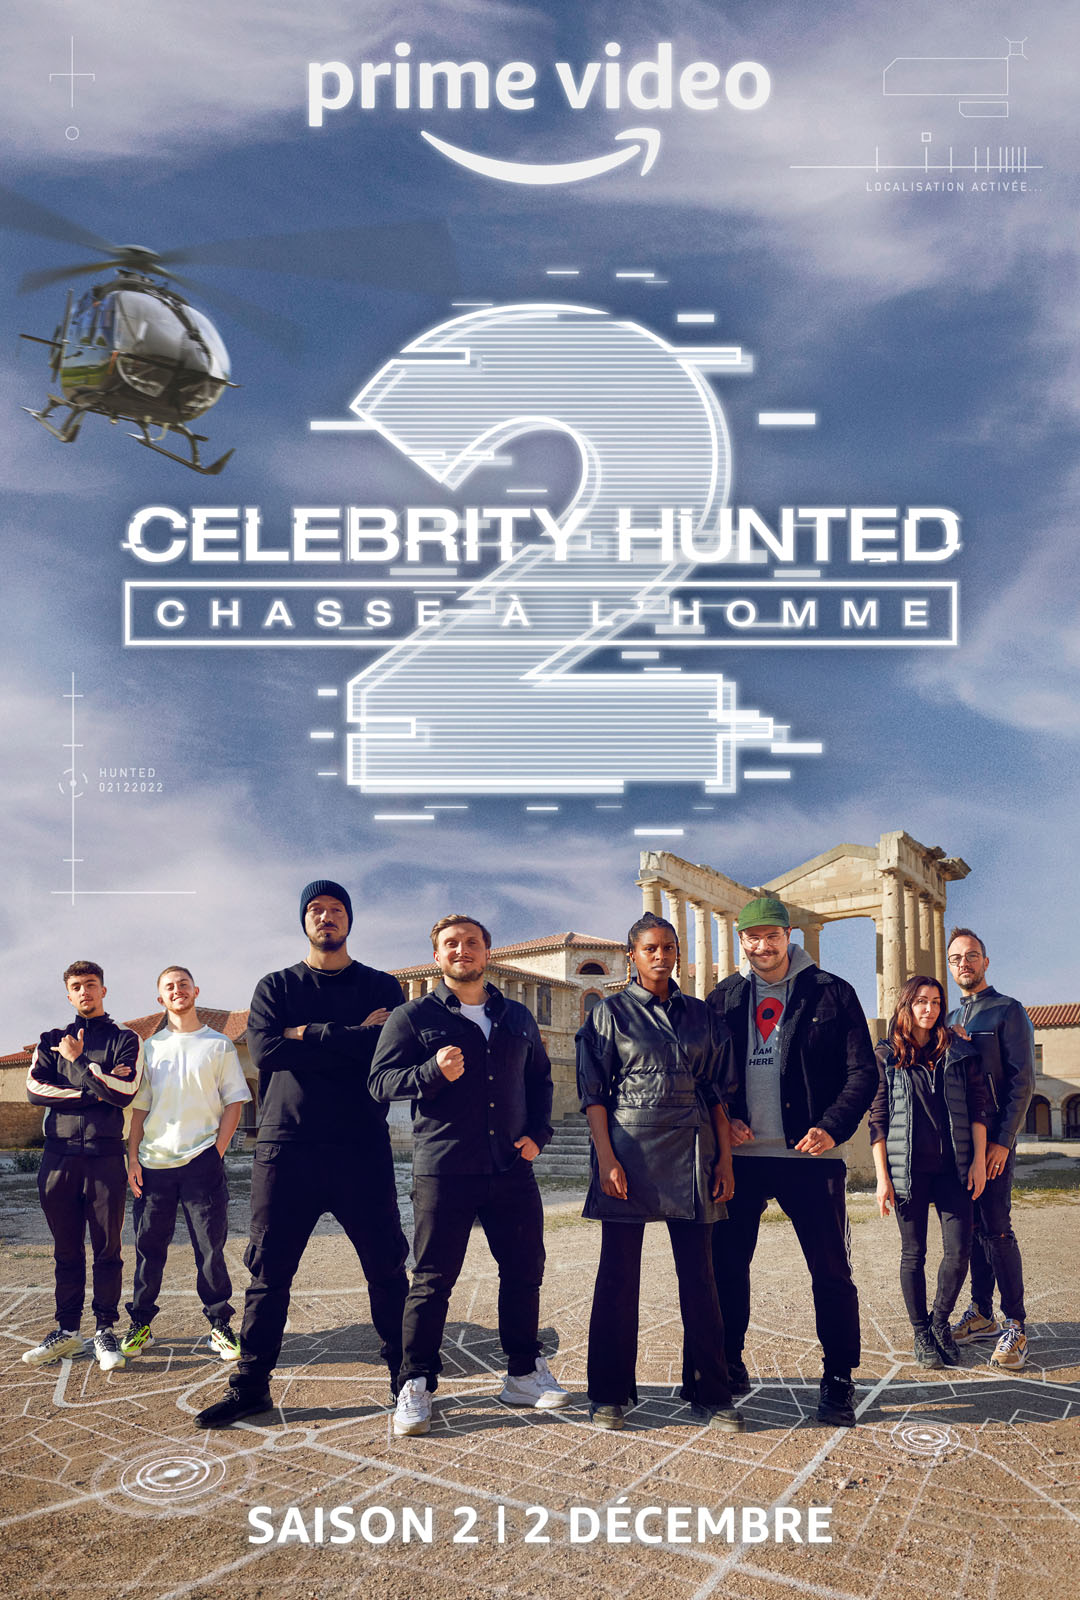 Celebrity hunted saison 2 streaming vf